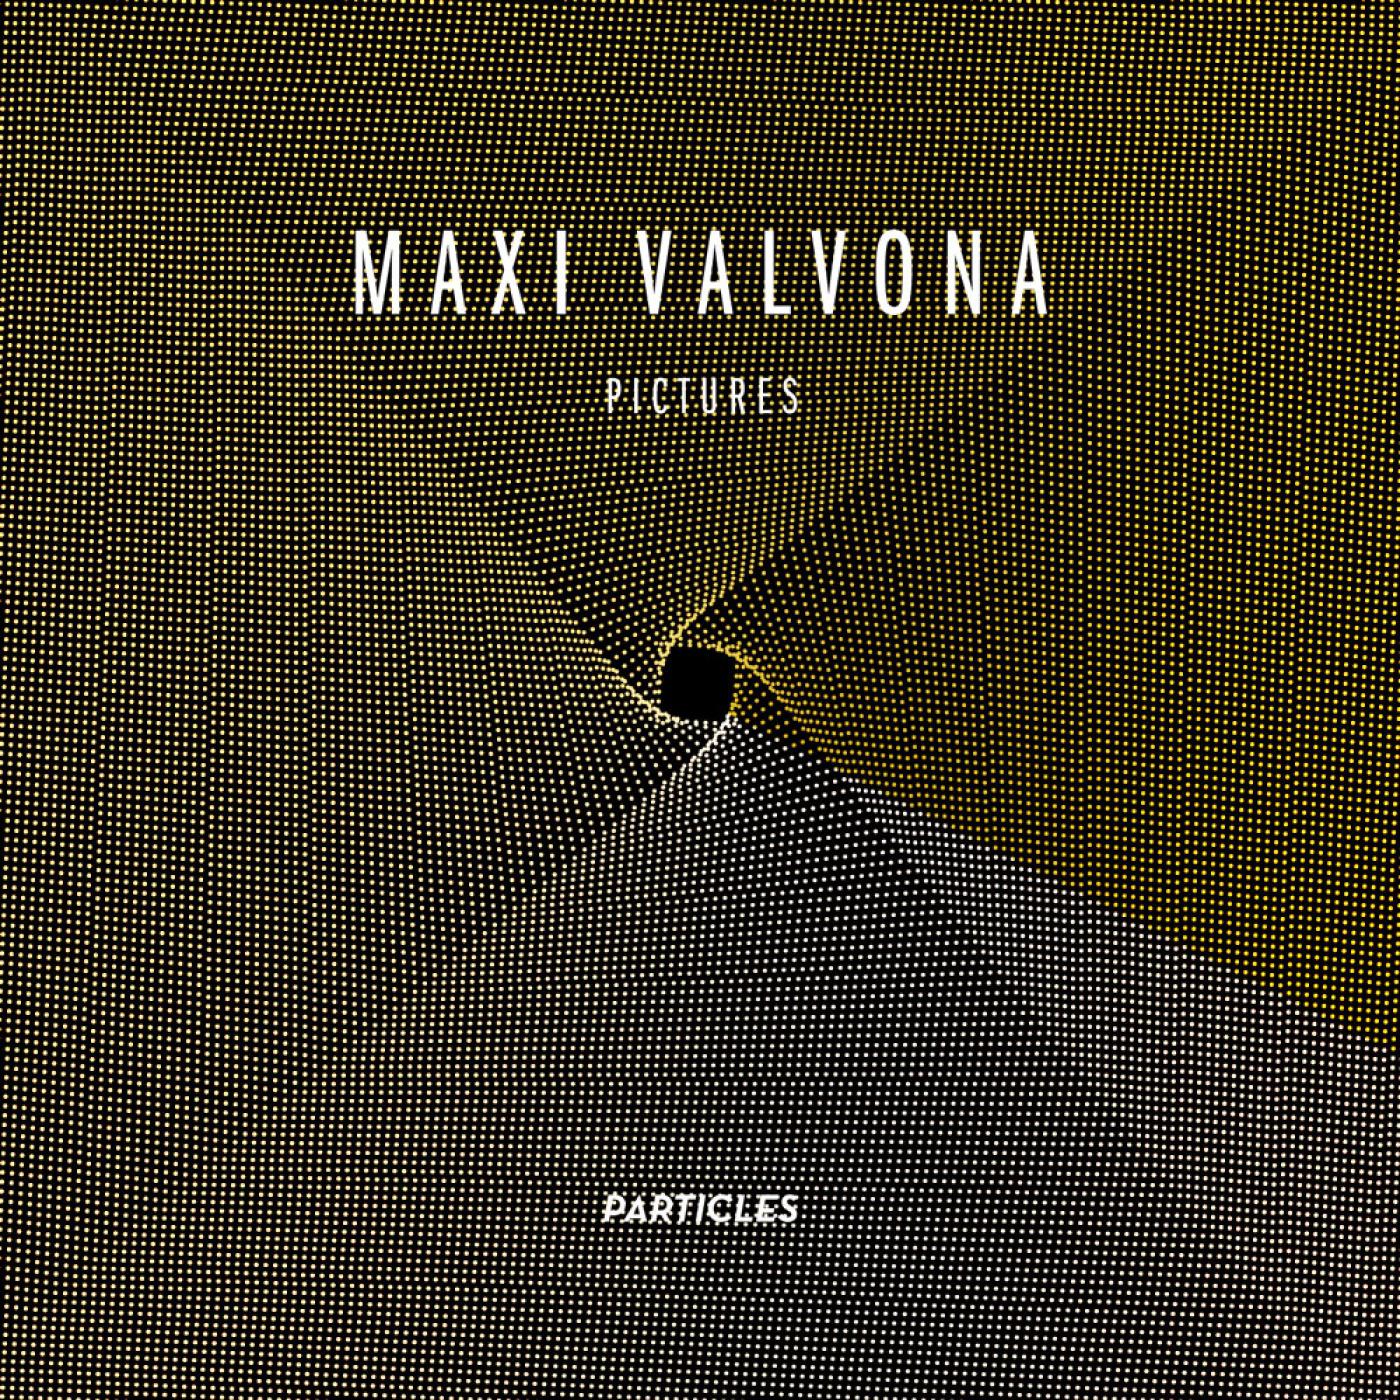 Maxi Valvona - Pictures